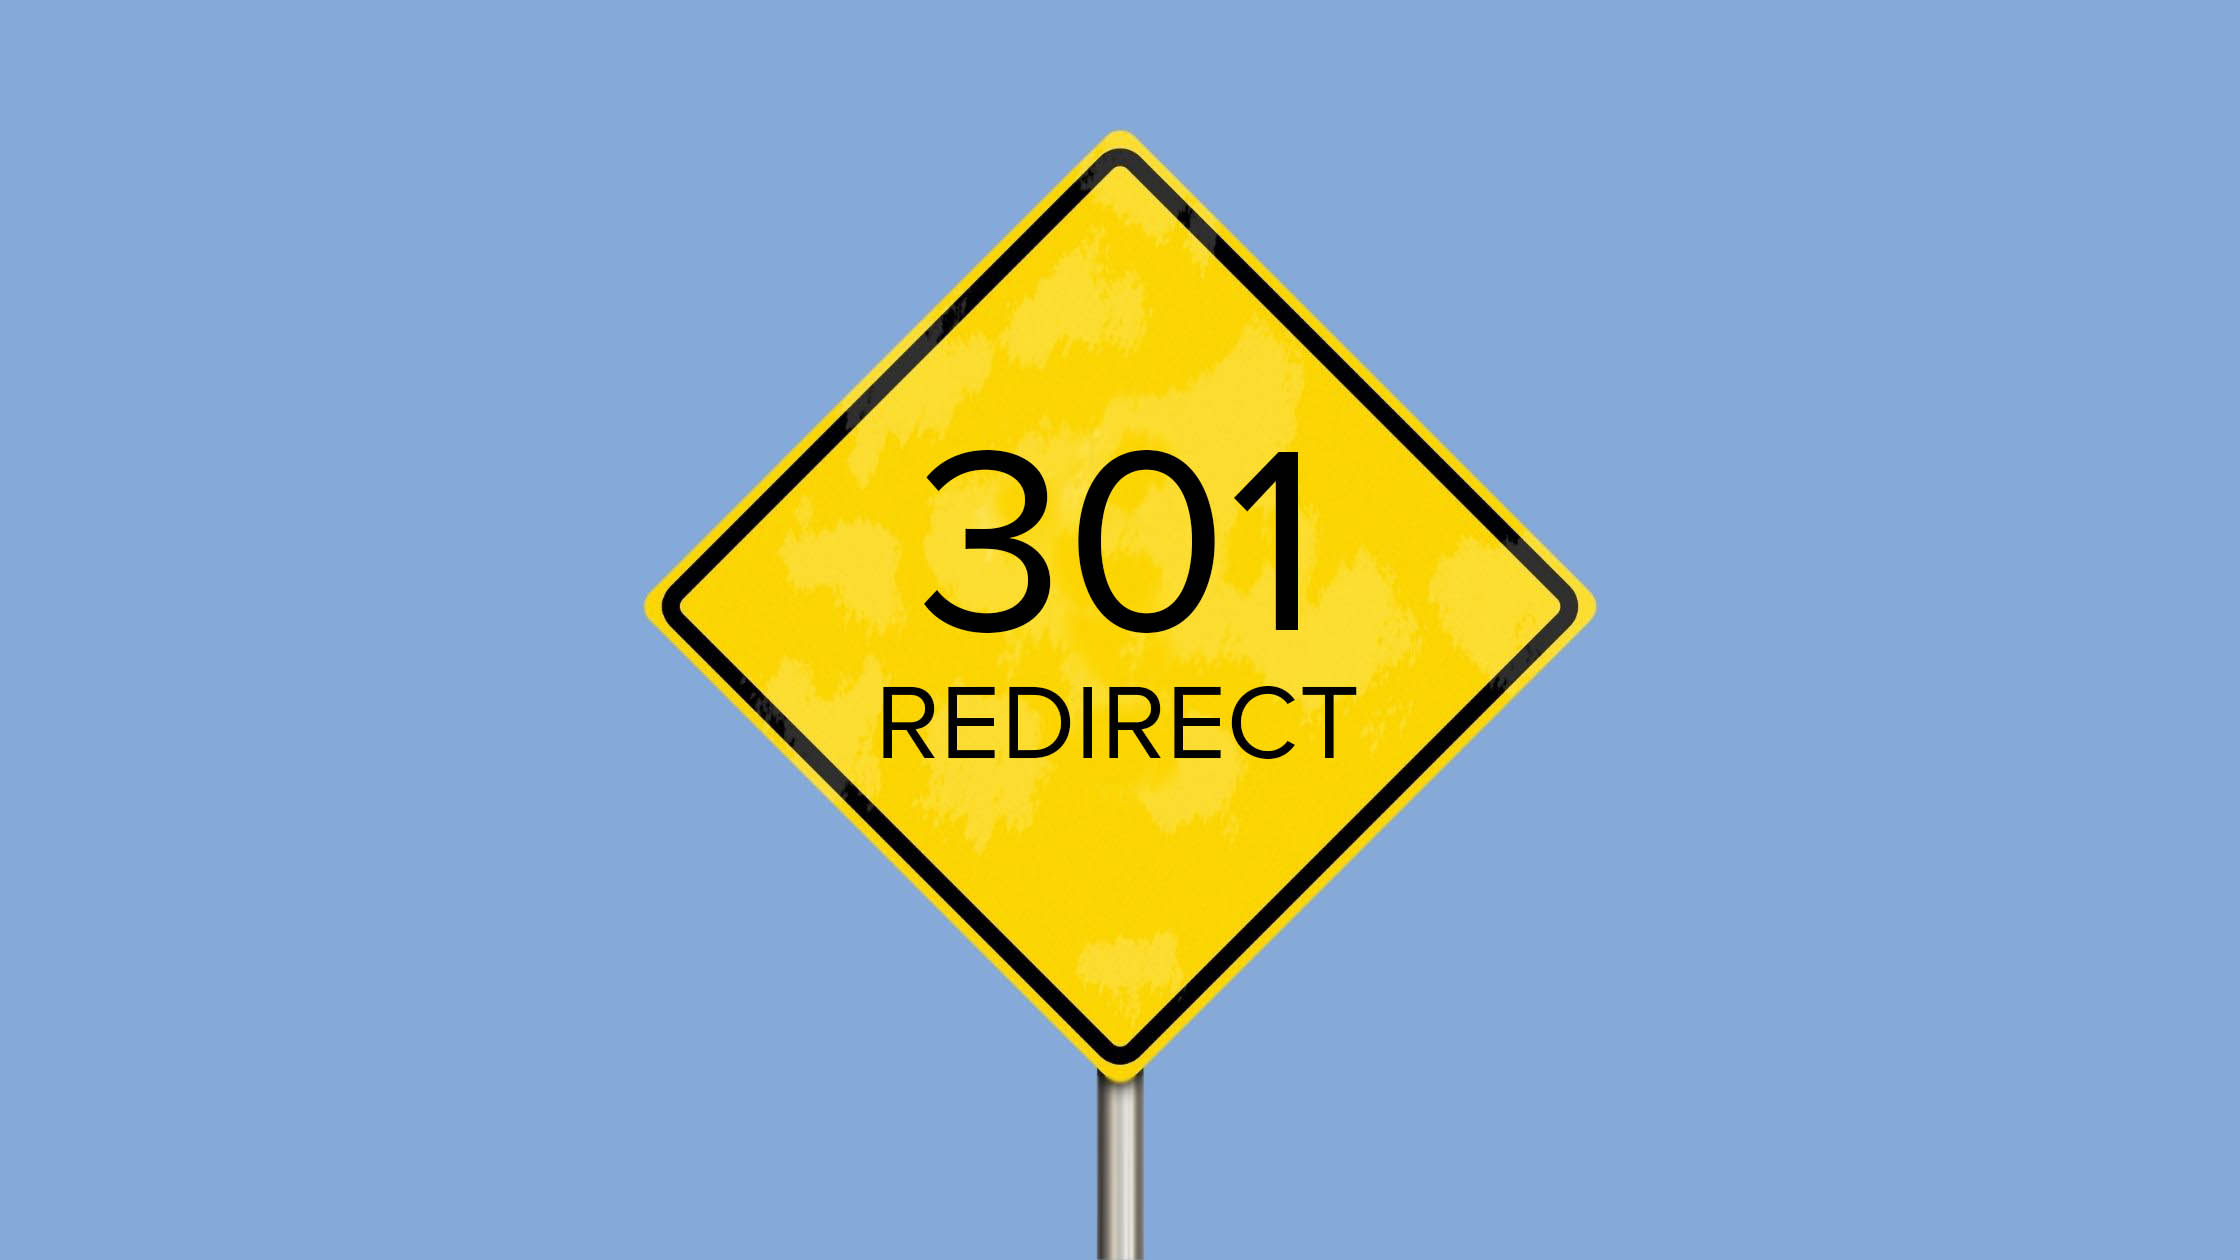 redirect type 301